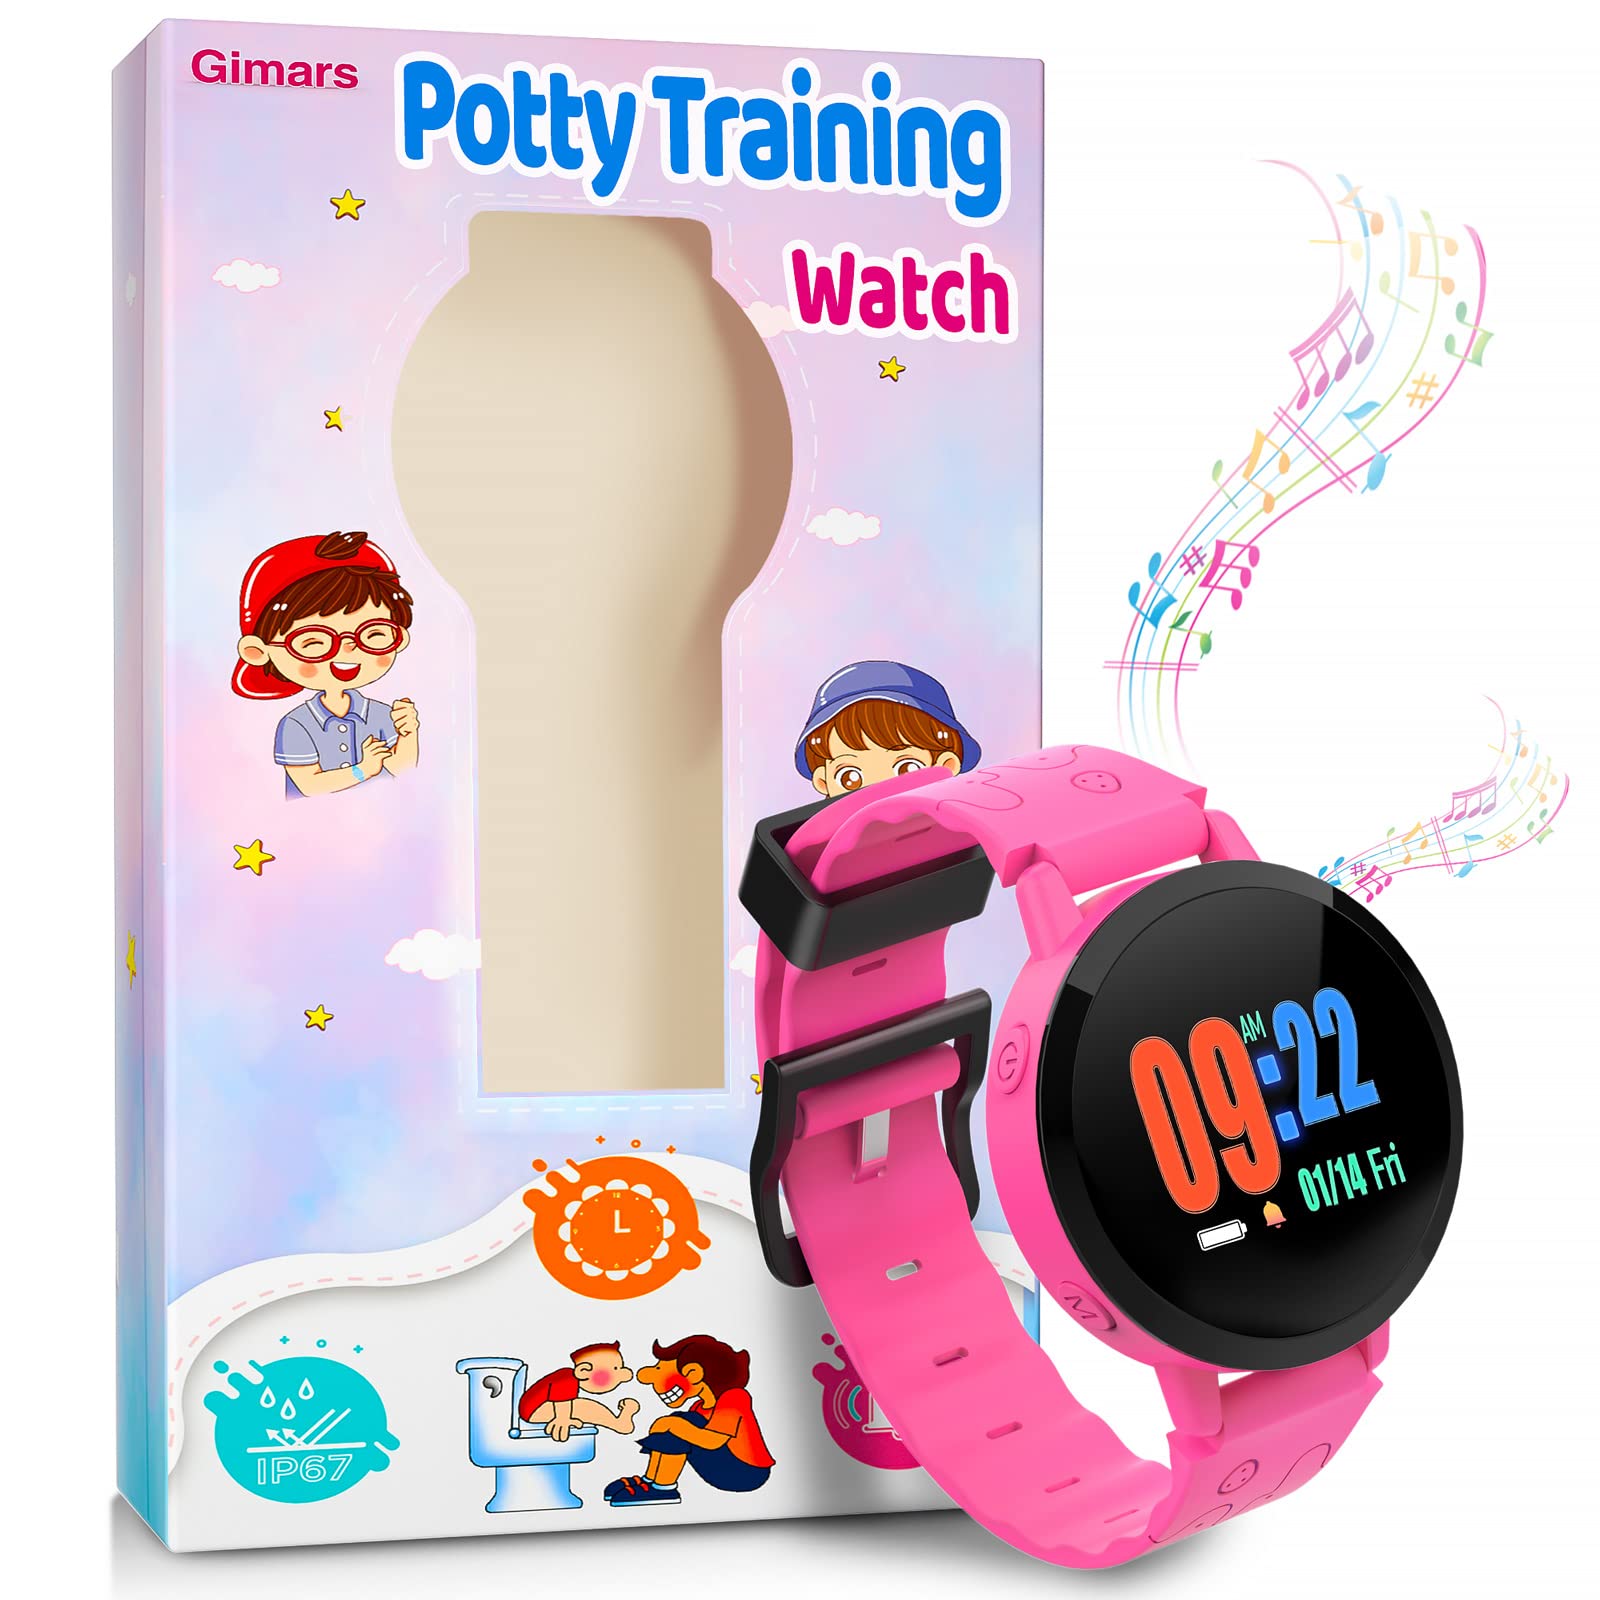 Potty Training Toilet Timer Watch for Boys & Girls, Fun Flashing